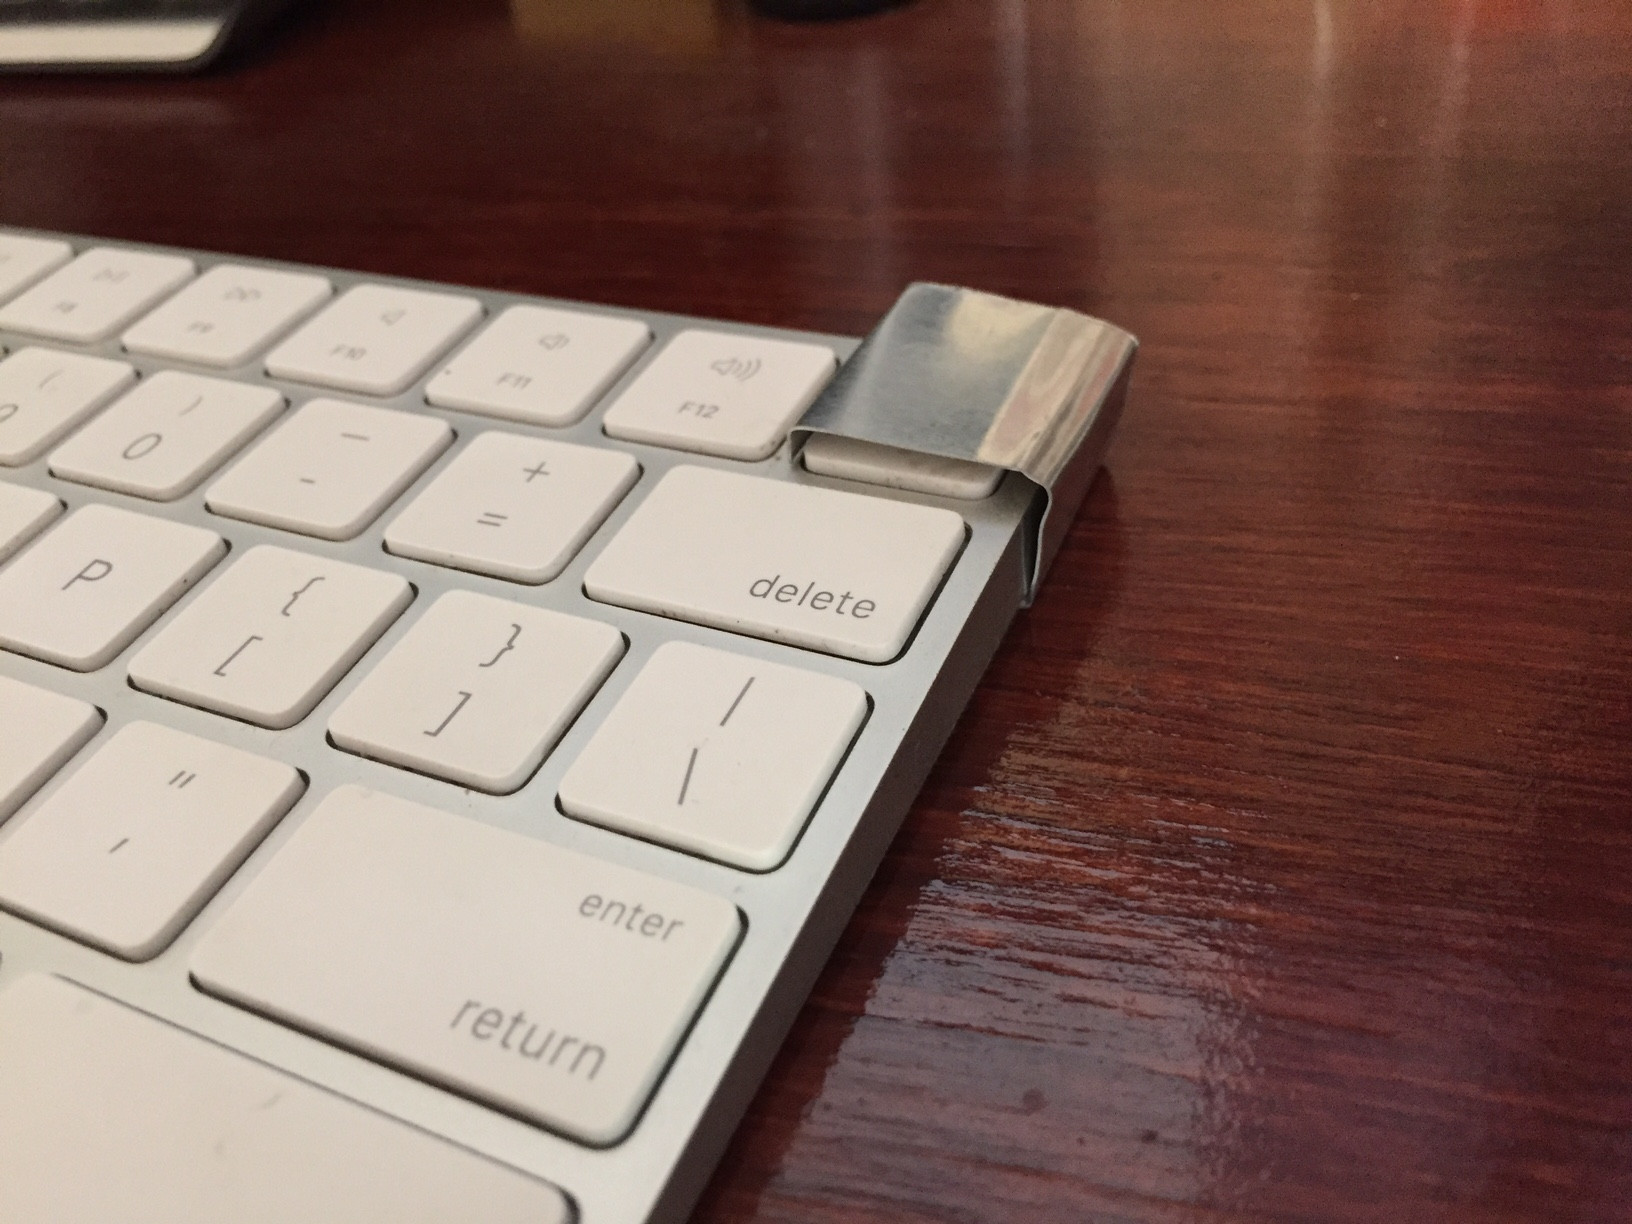 Eject Key For Mac On Windows Keyboard